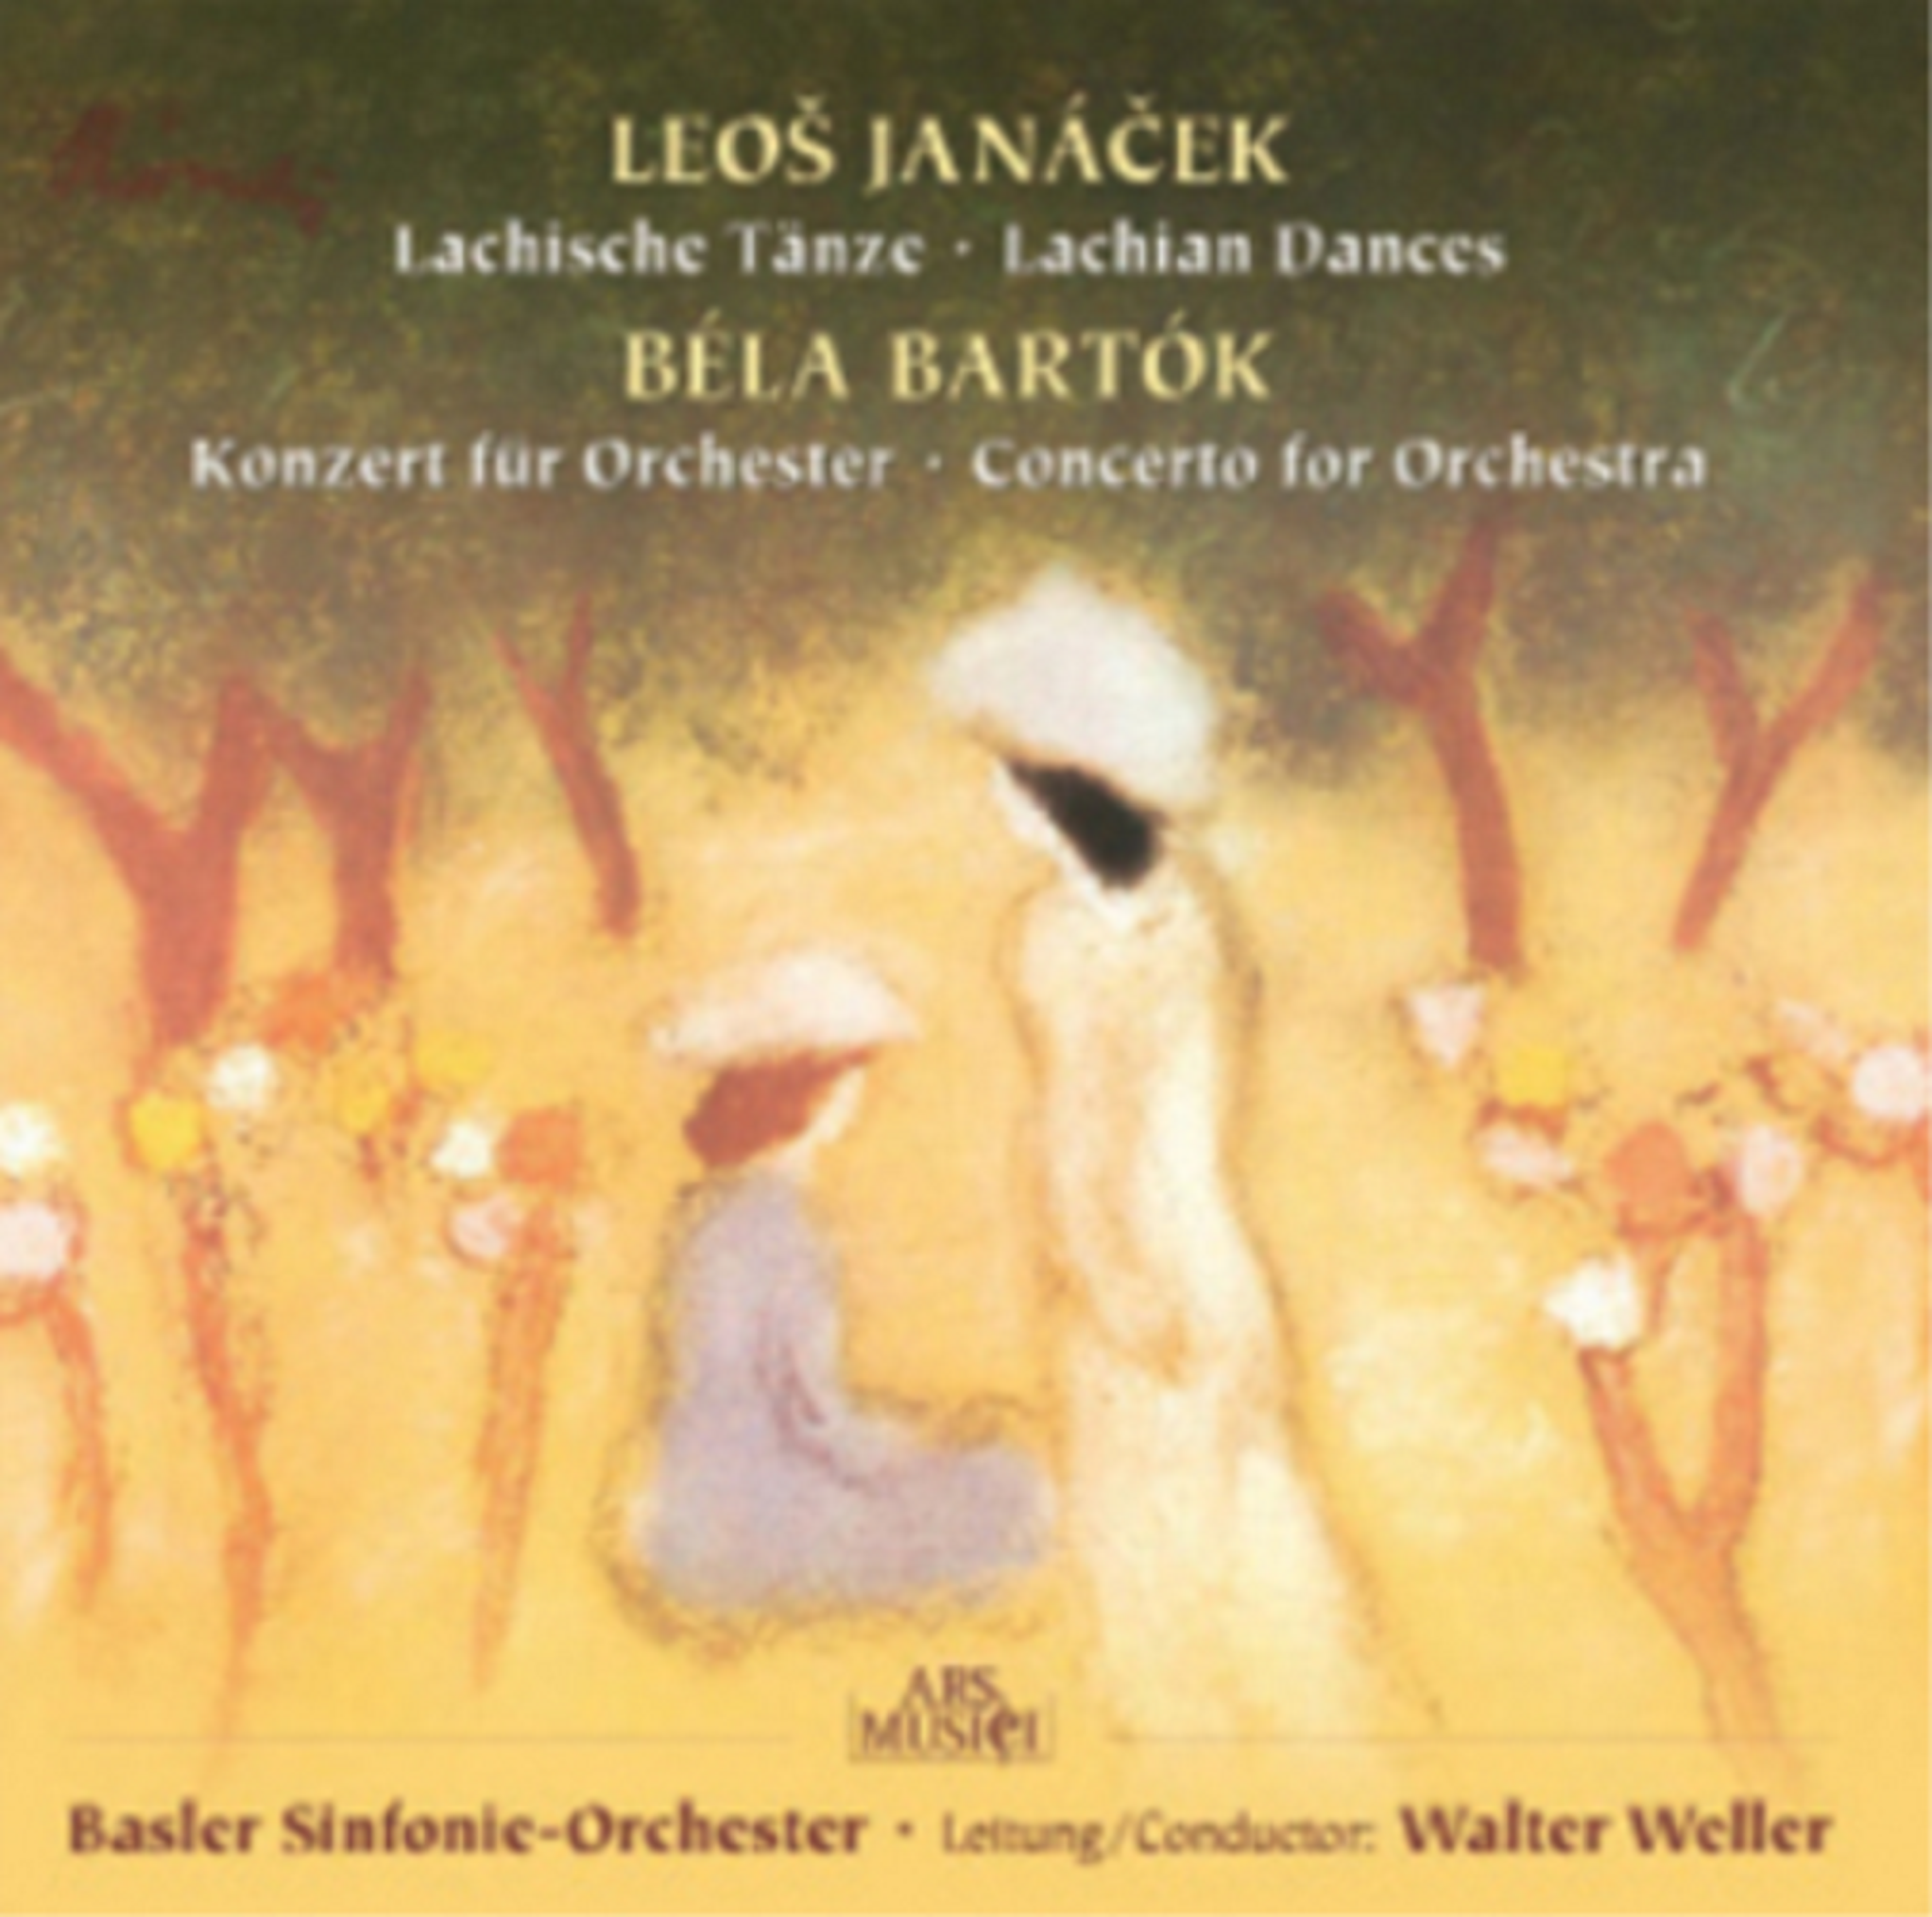 Concerto for Orchestra | Jancek, Bartok image0